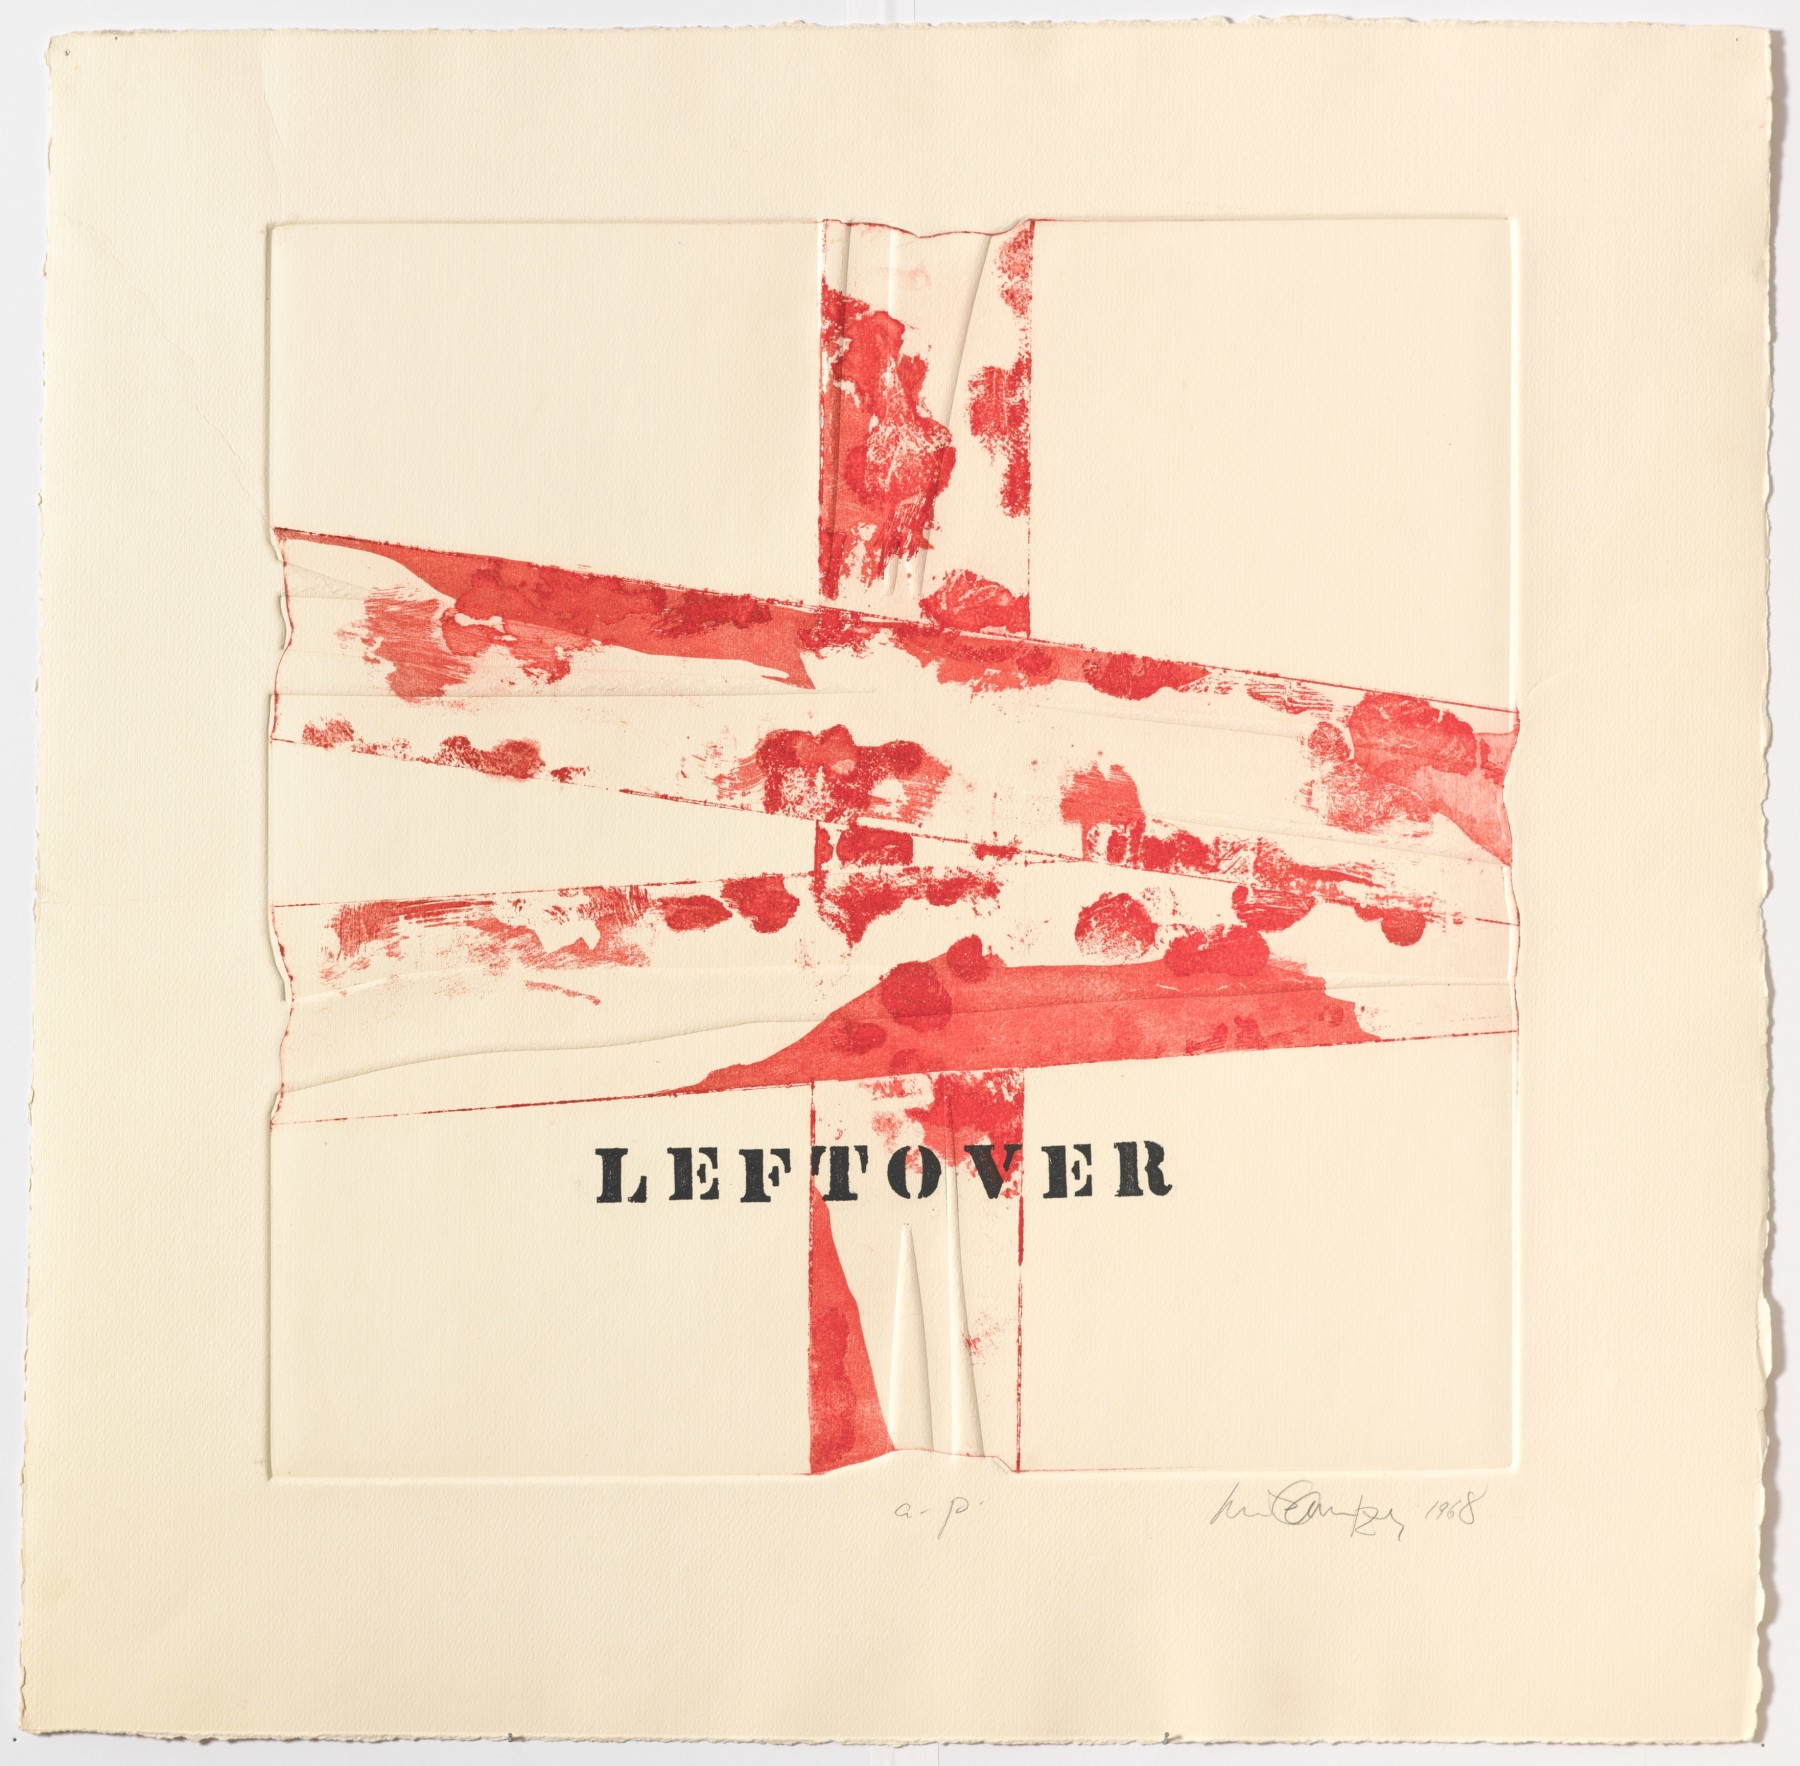 Luis Camnitzer, Leftover, 1968